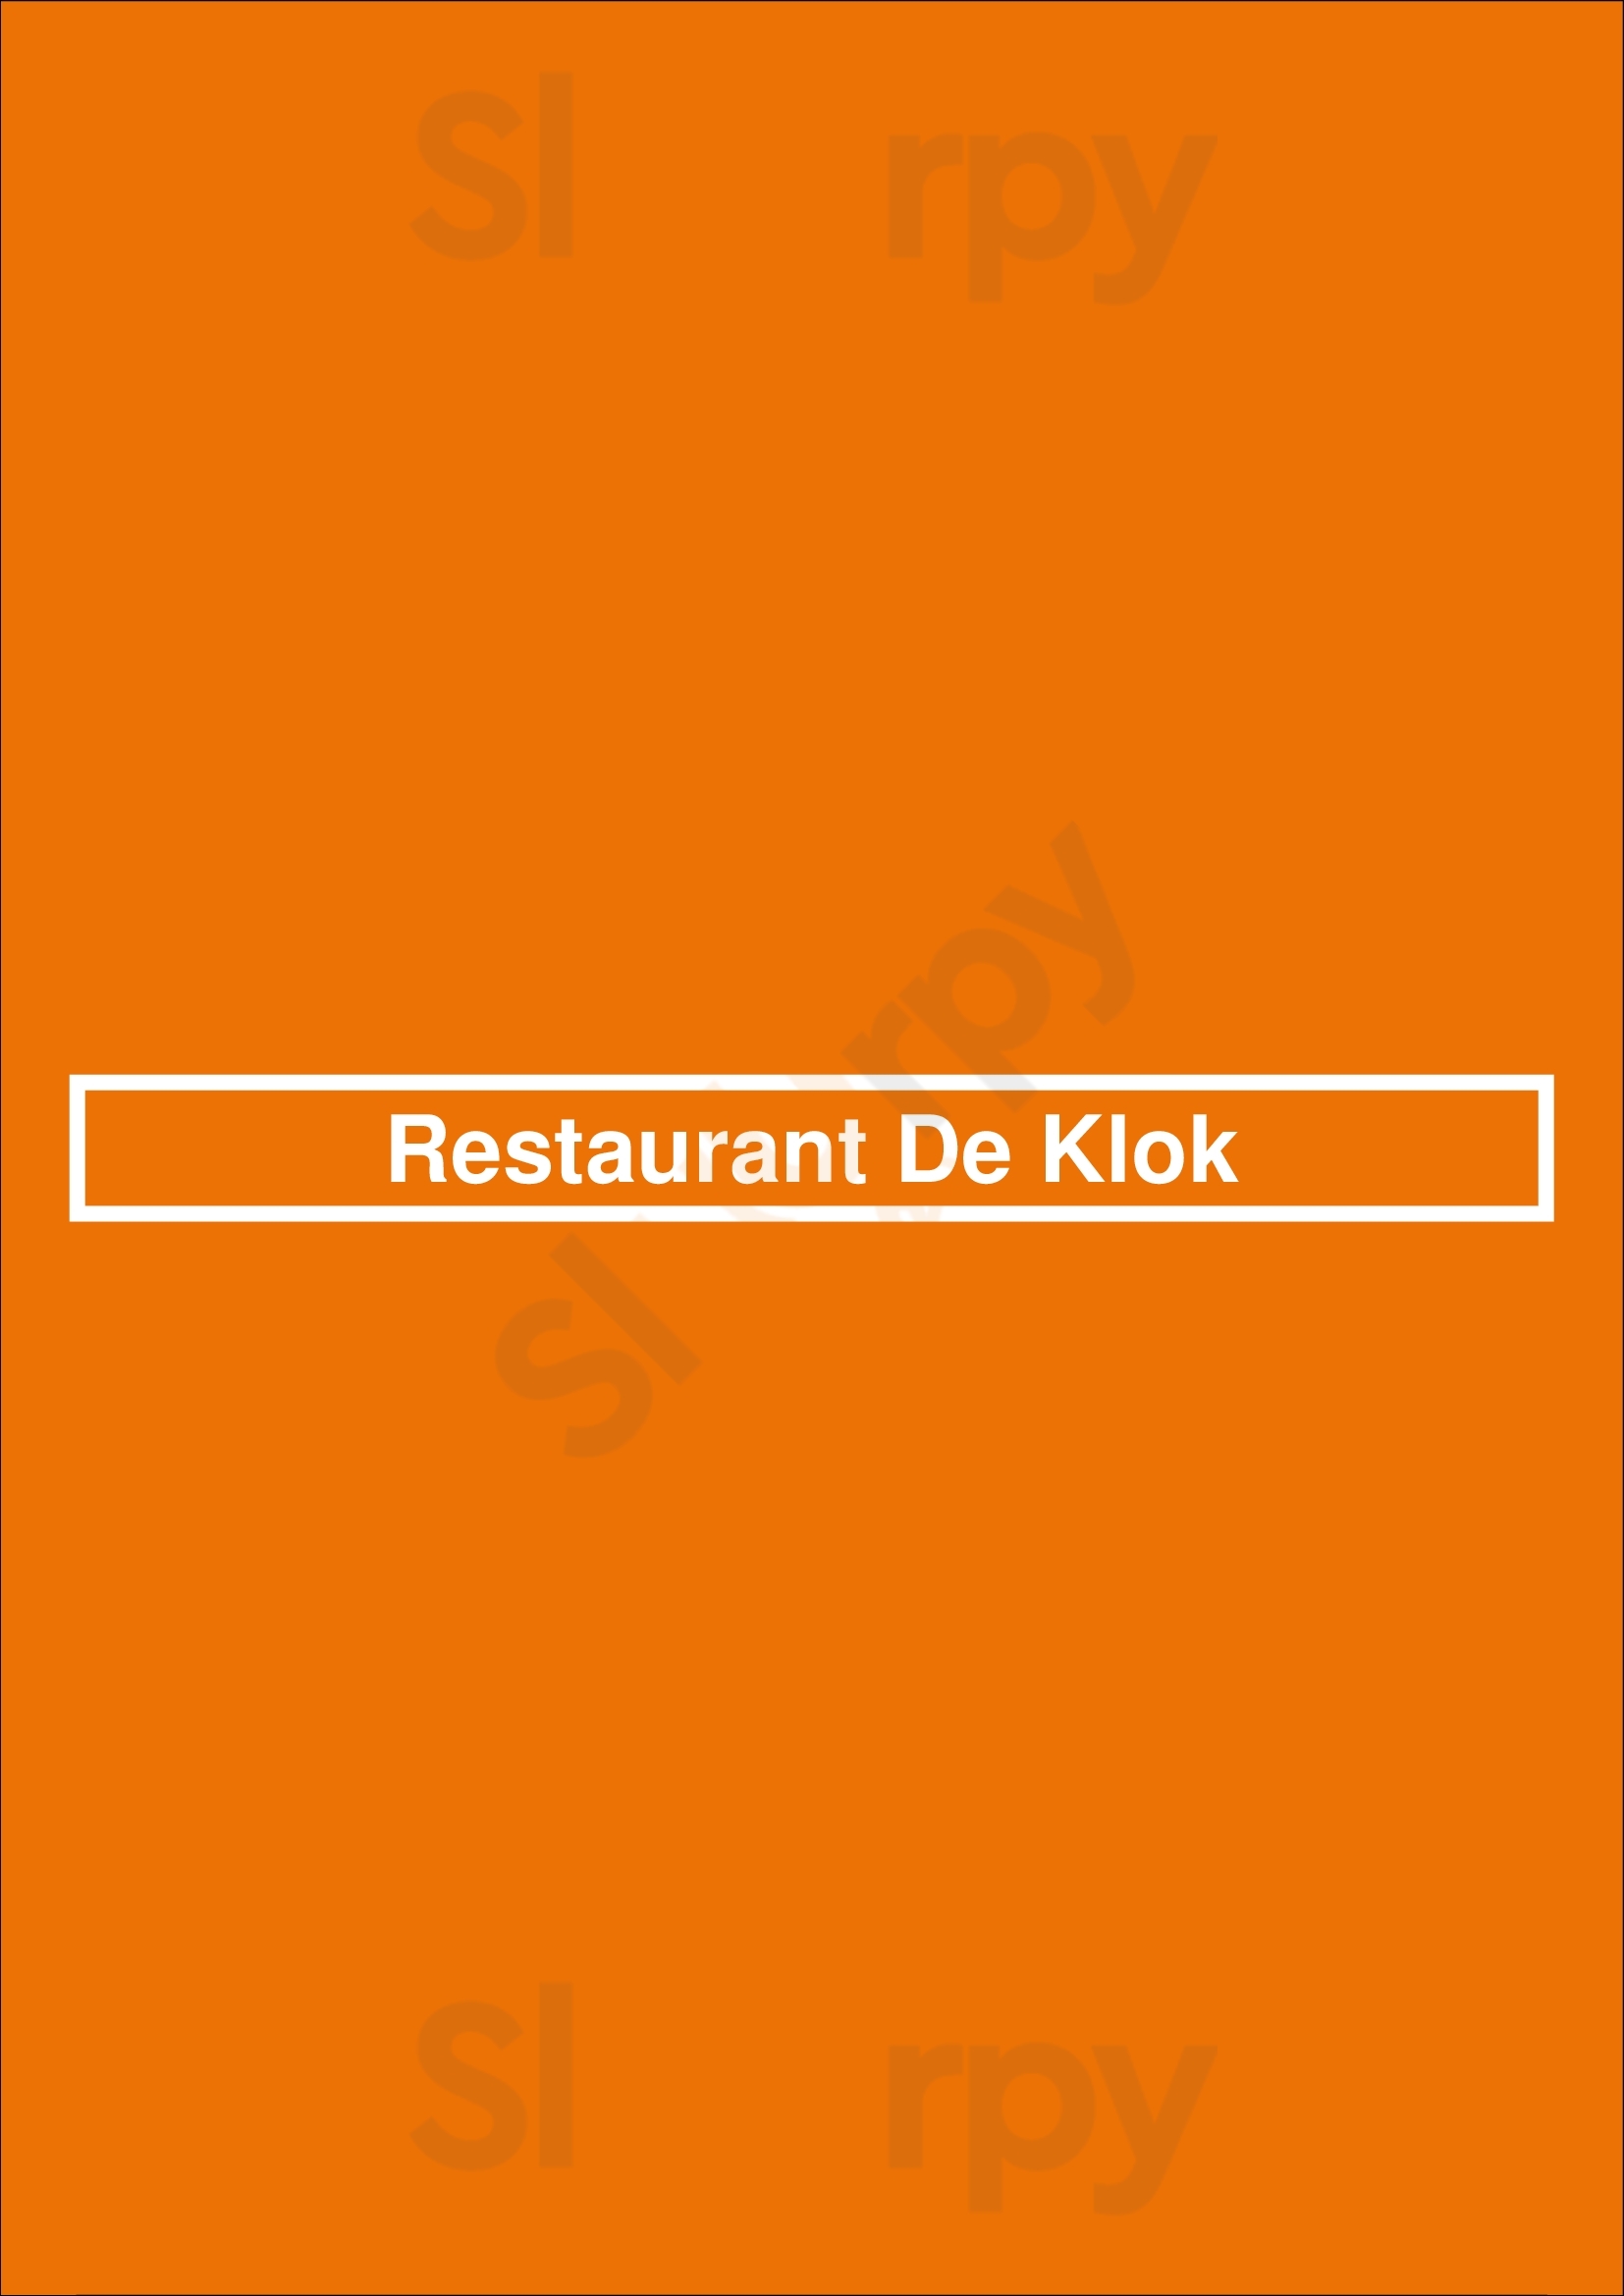 Restaurant De Klok Leiden Menu - 1